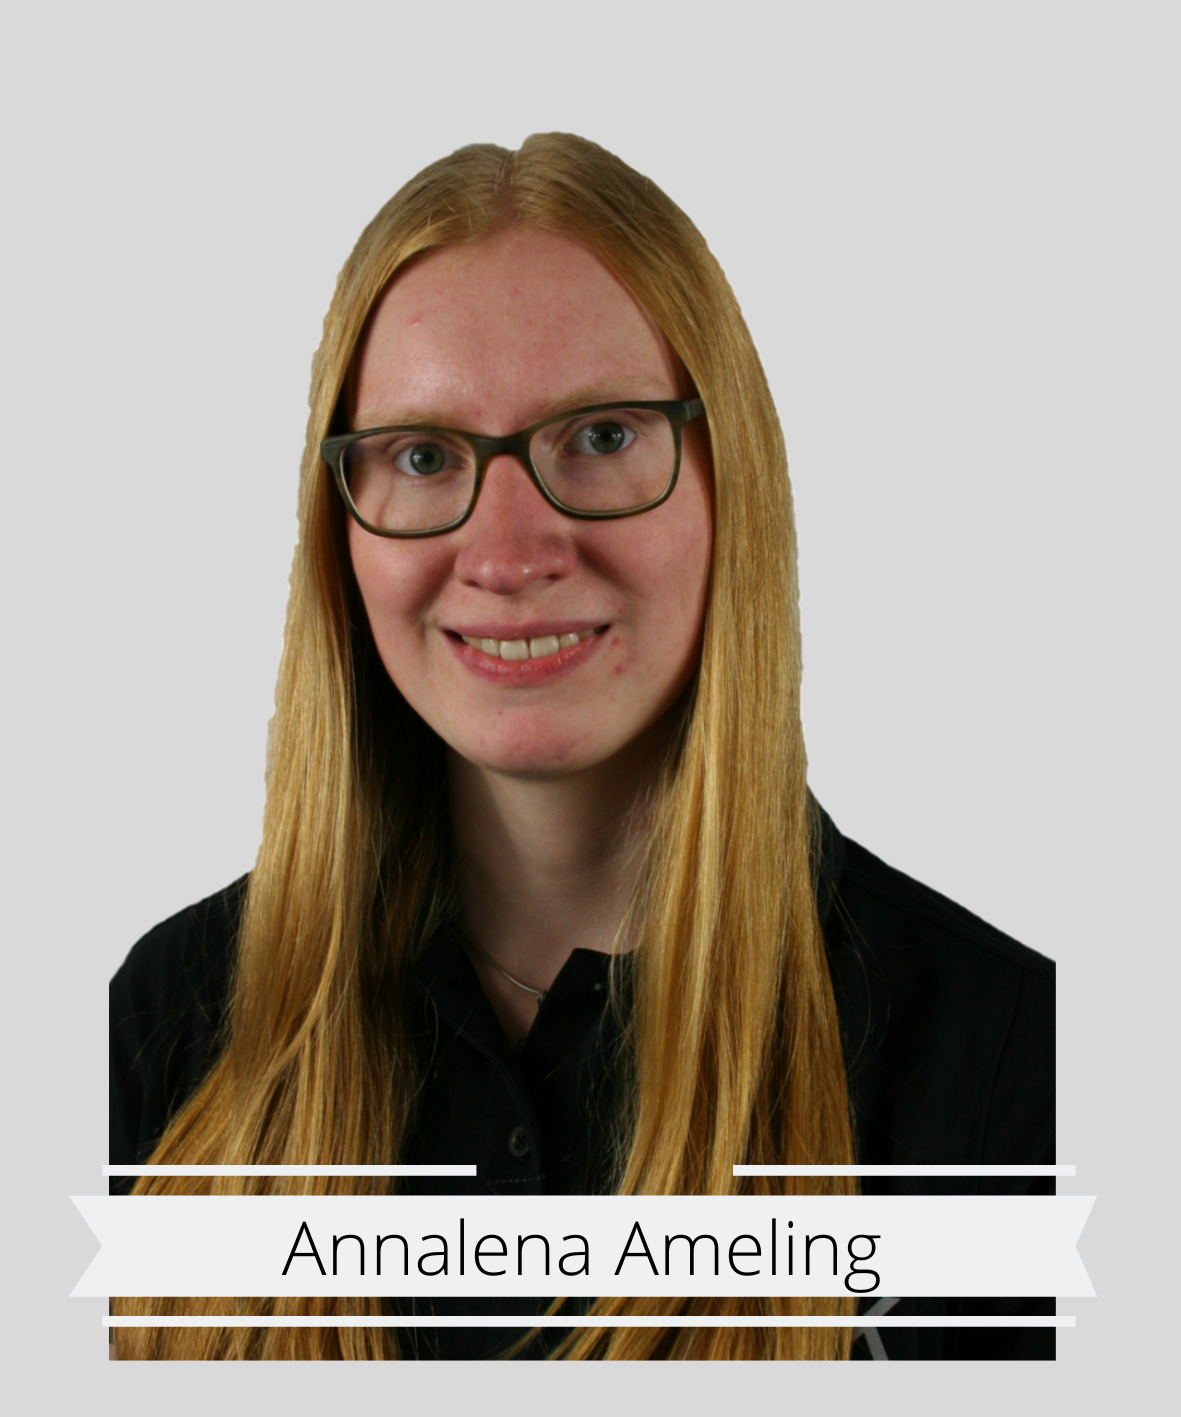 Annalena Ameling